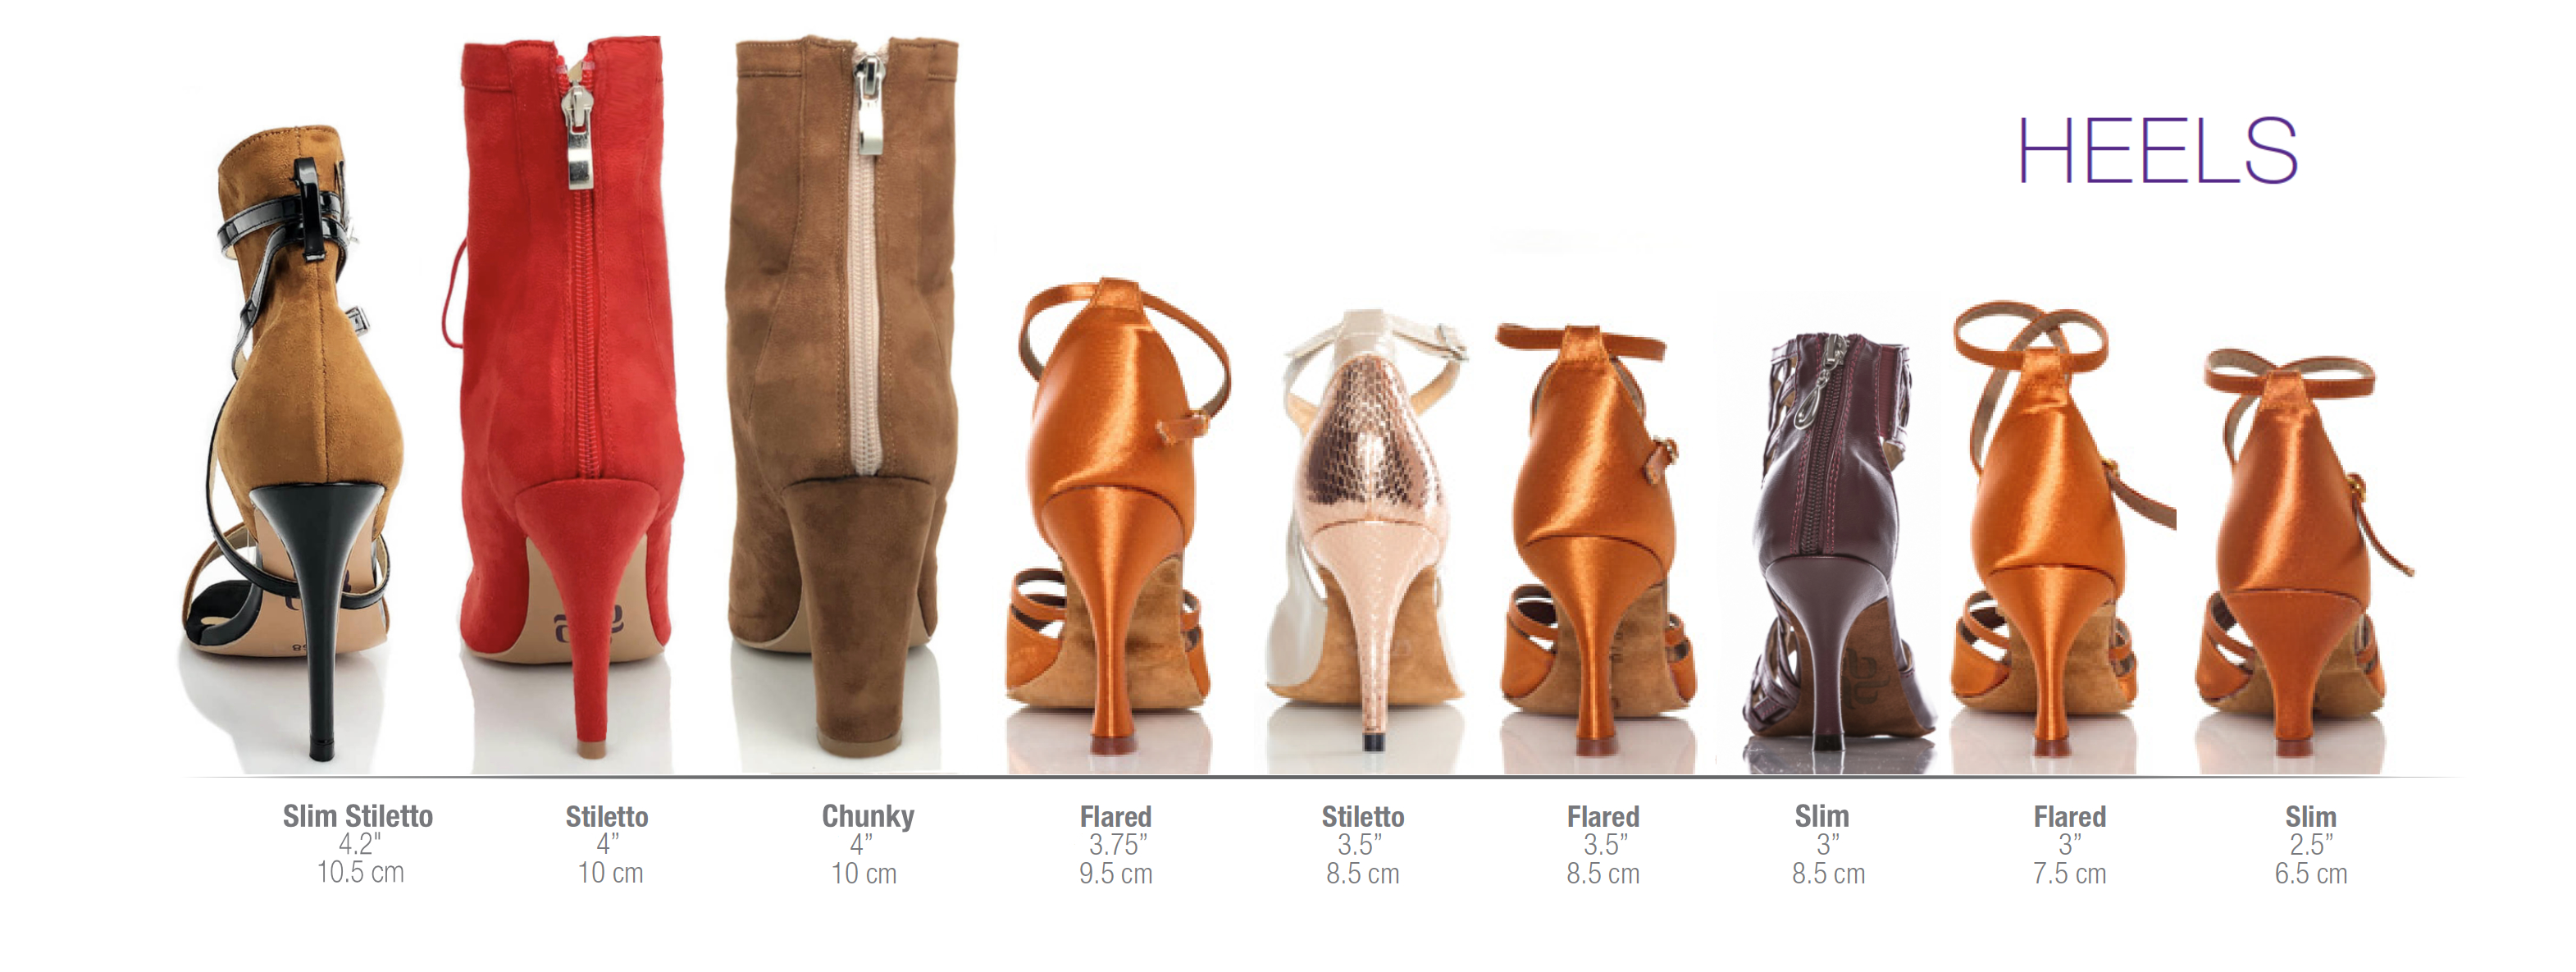 Dance Shoe Or Fashion Shoe. Why Are Burju Shoes So Comfortable? – Burju ...